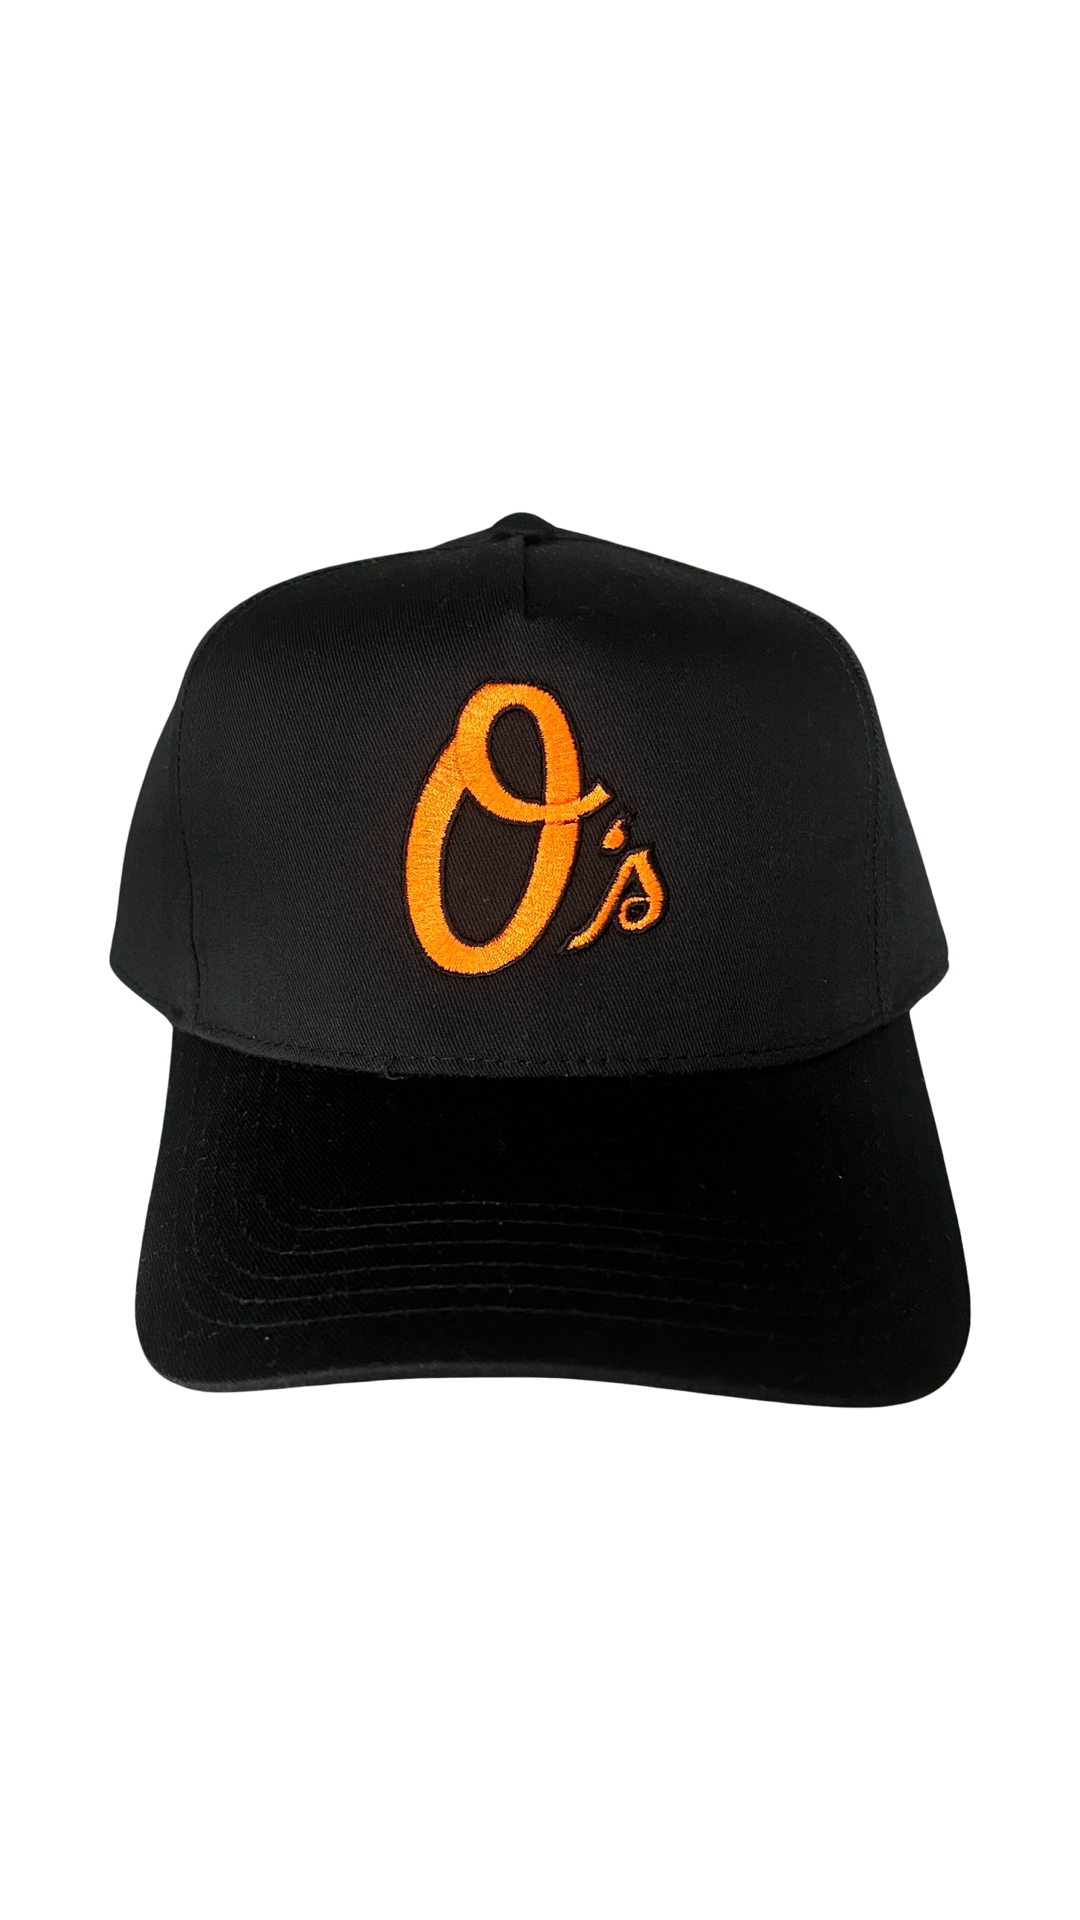 TillDeath“O’s” trucker hat